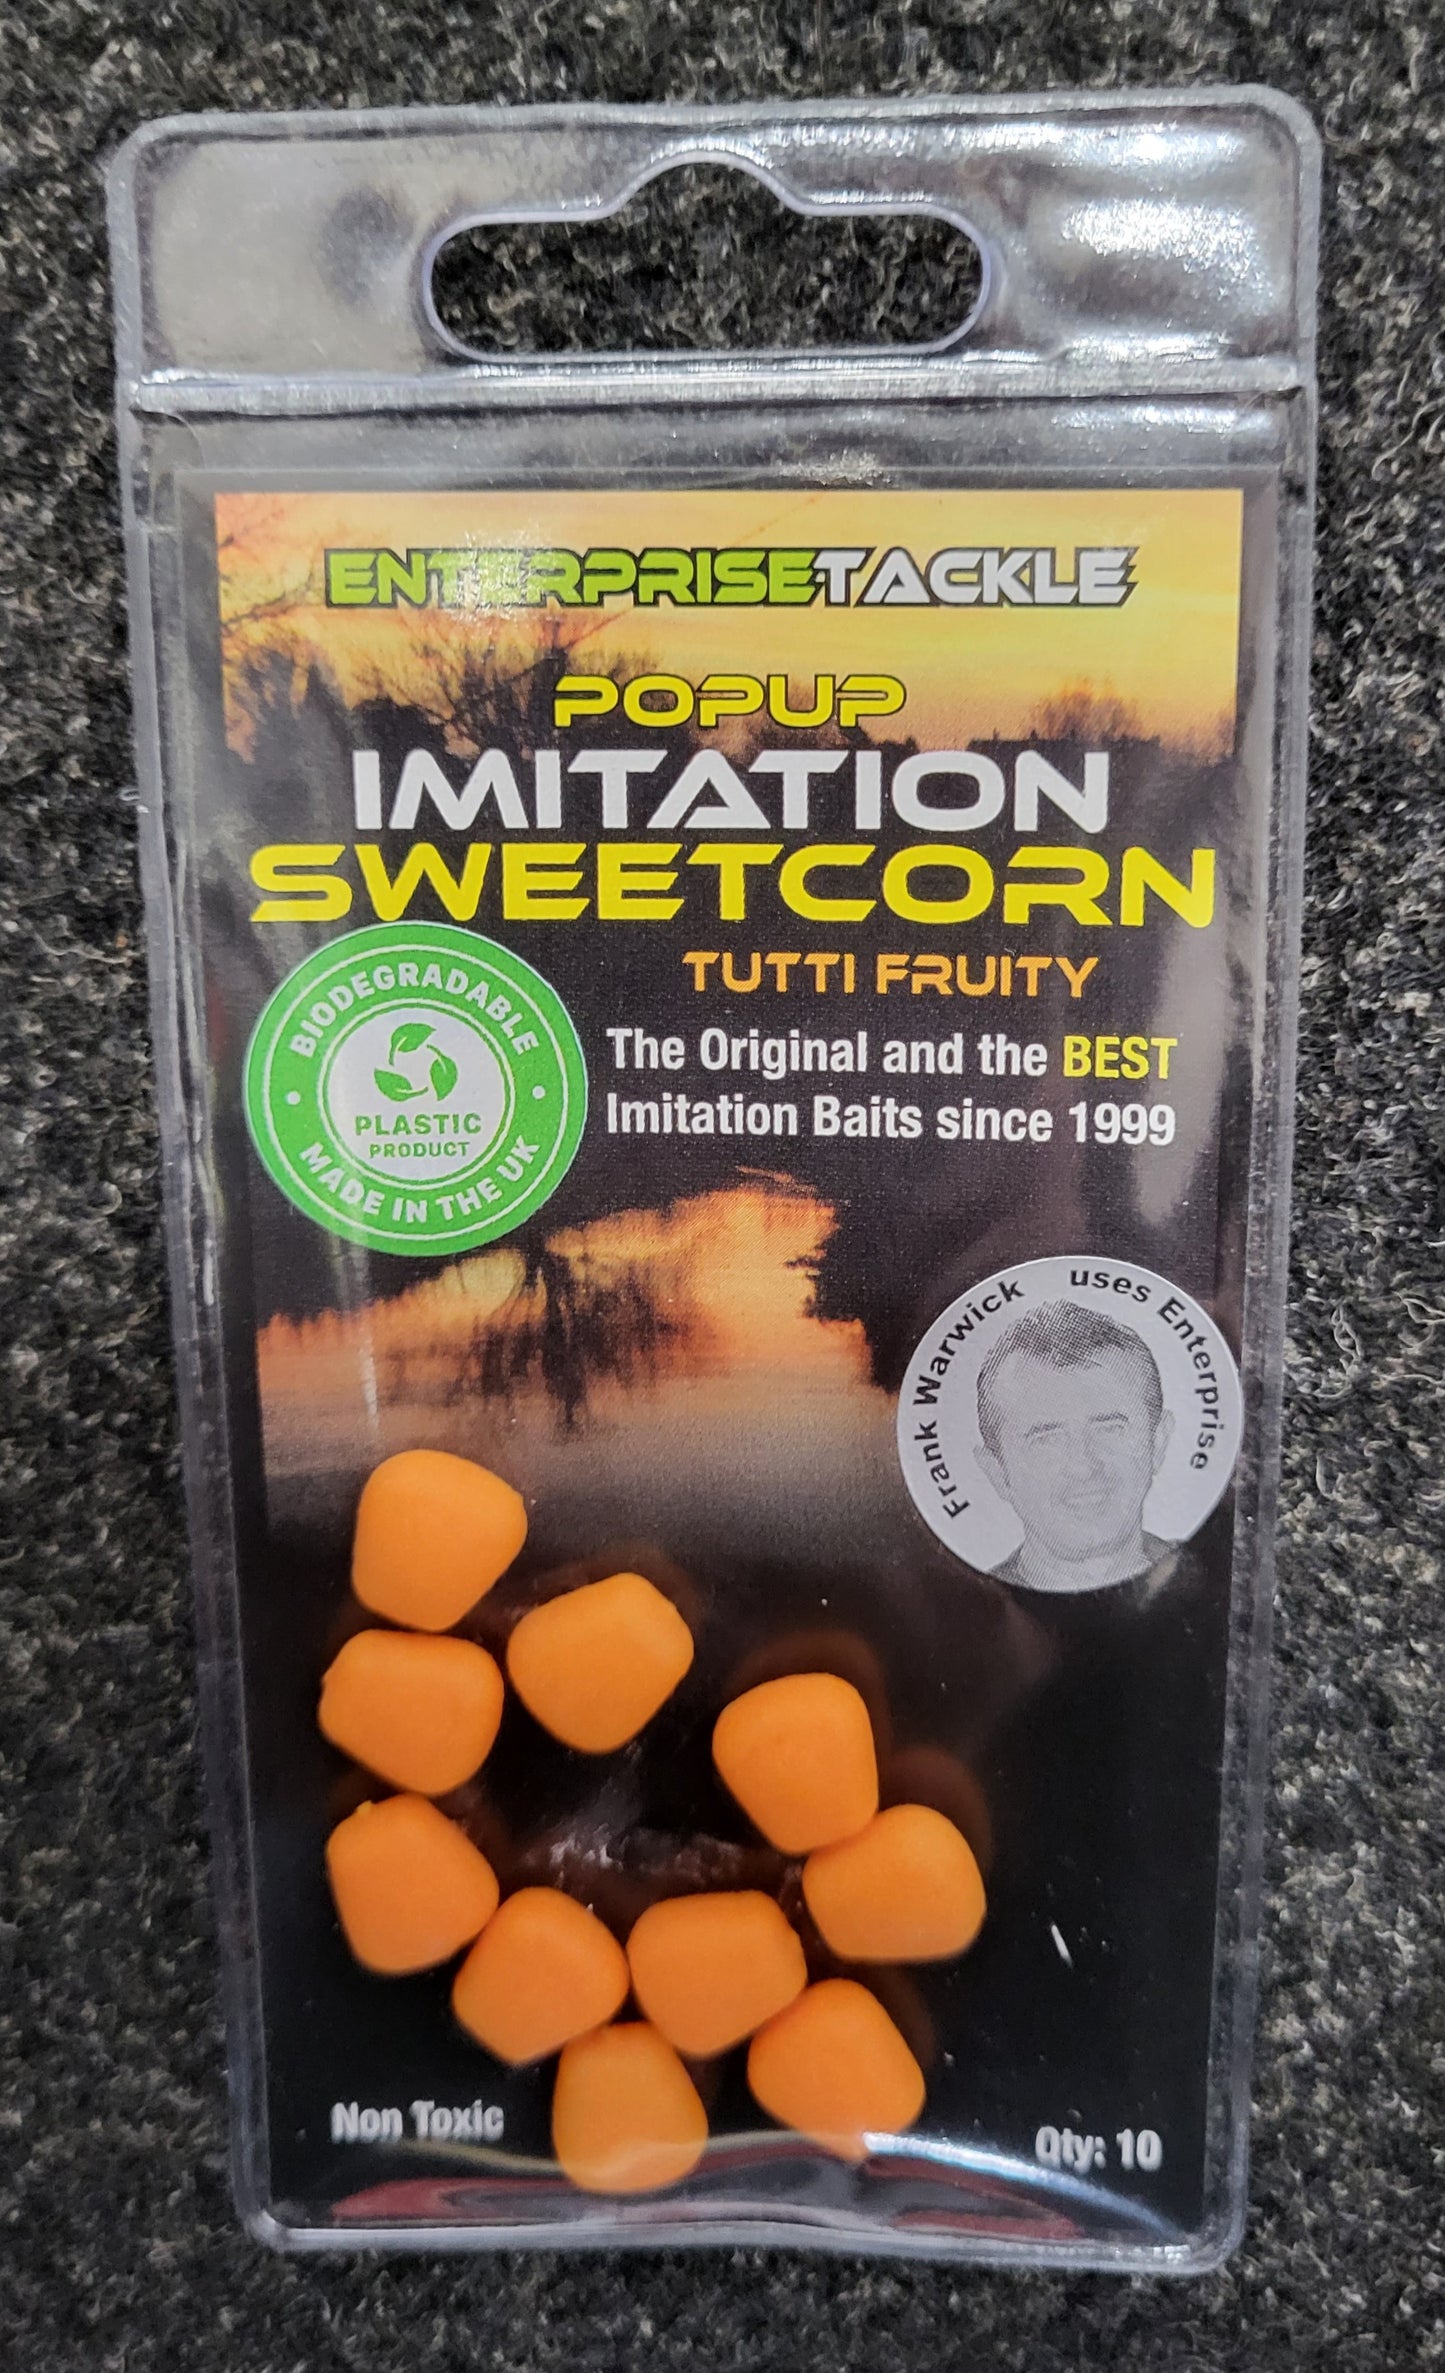 EnterPriseTackle Popup Imitation Sweetcorn Colour Orange Tutti Fruity